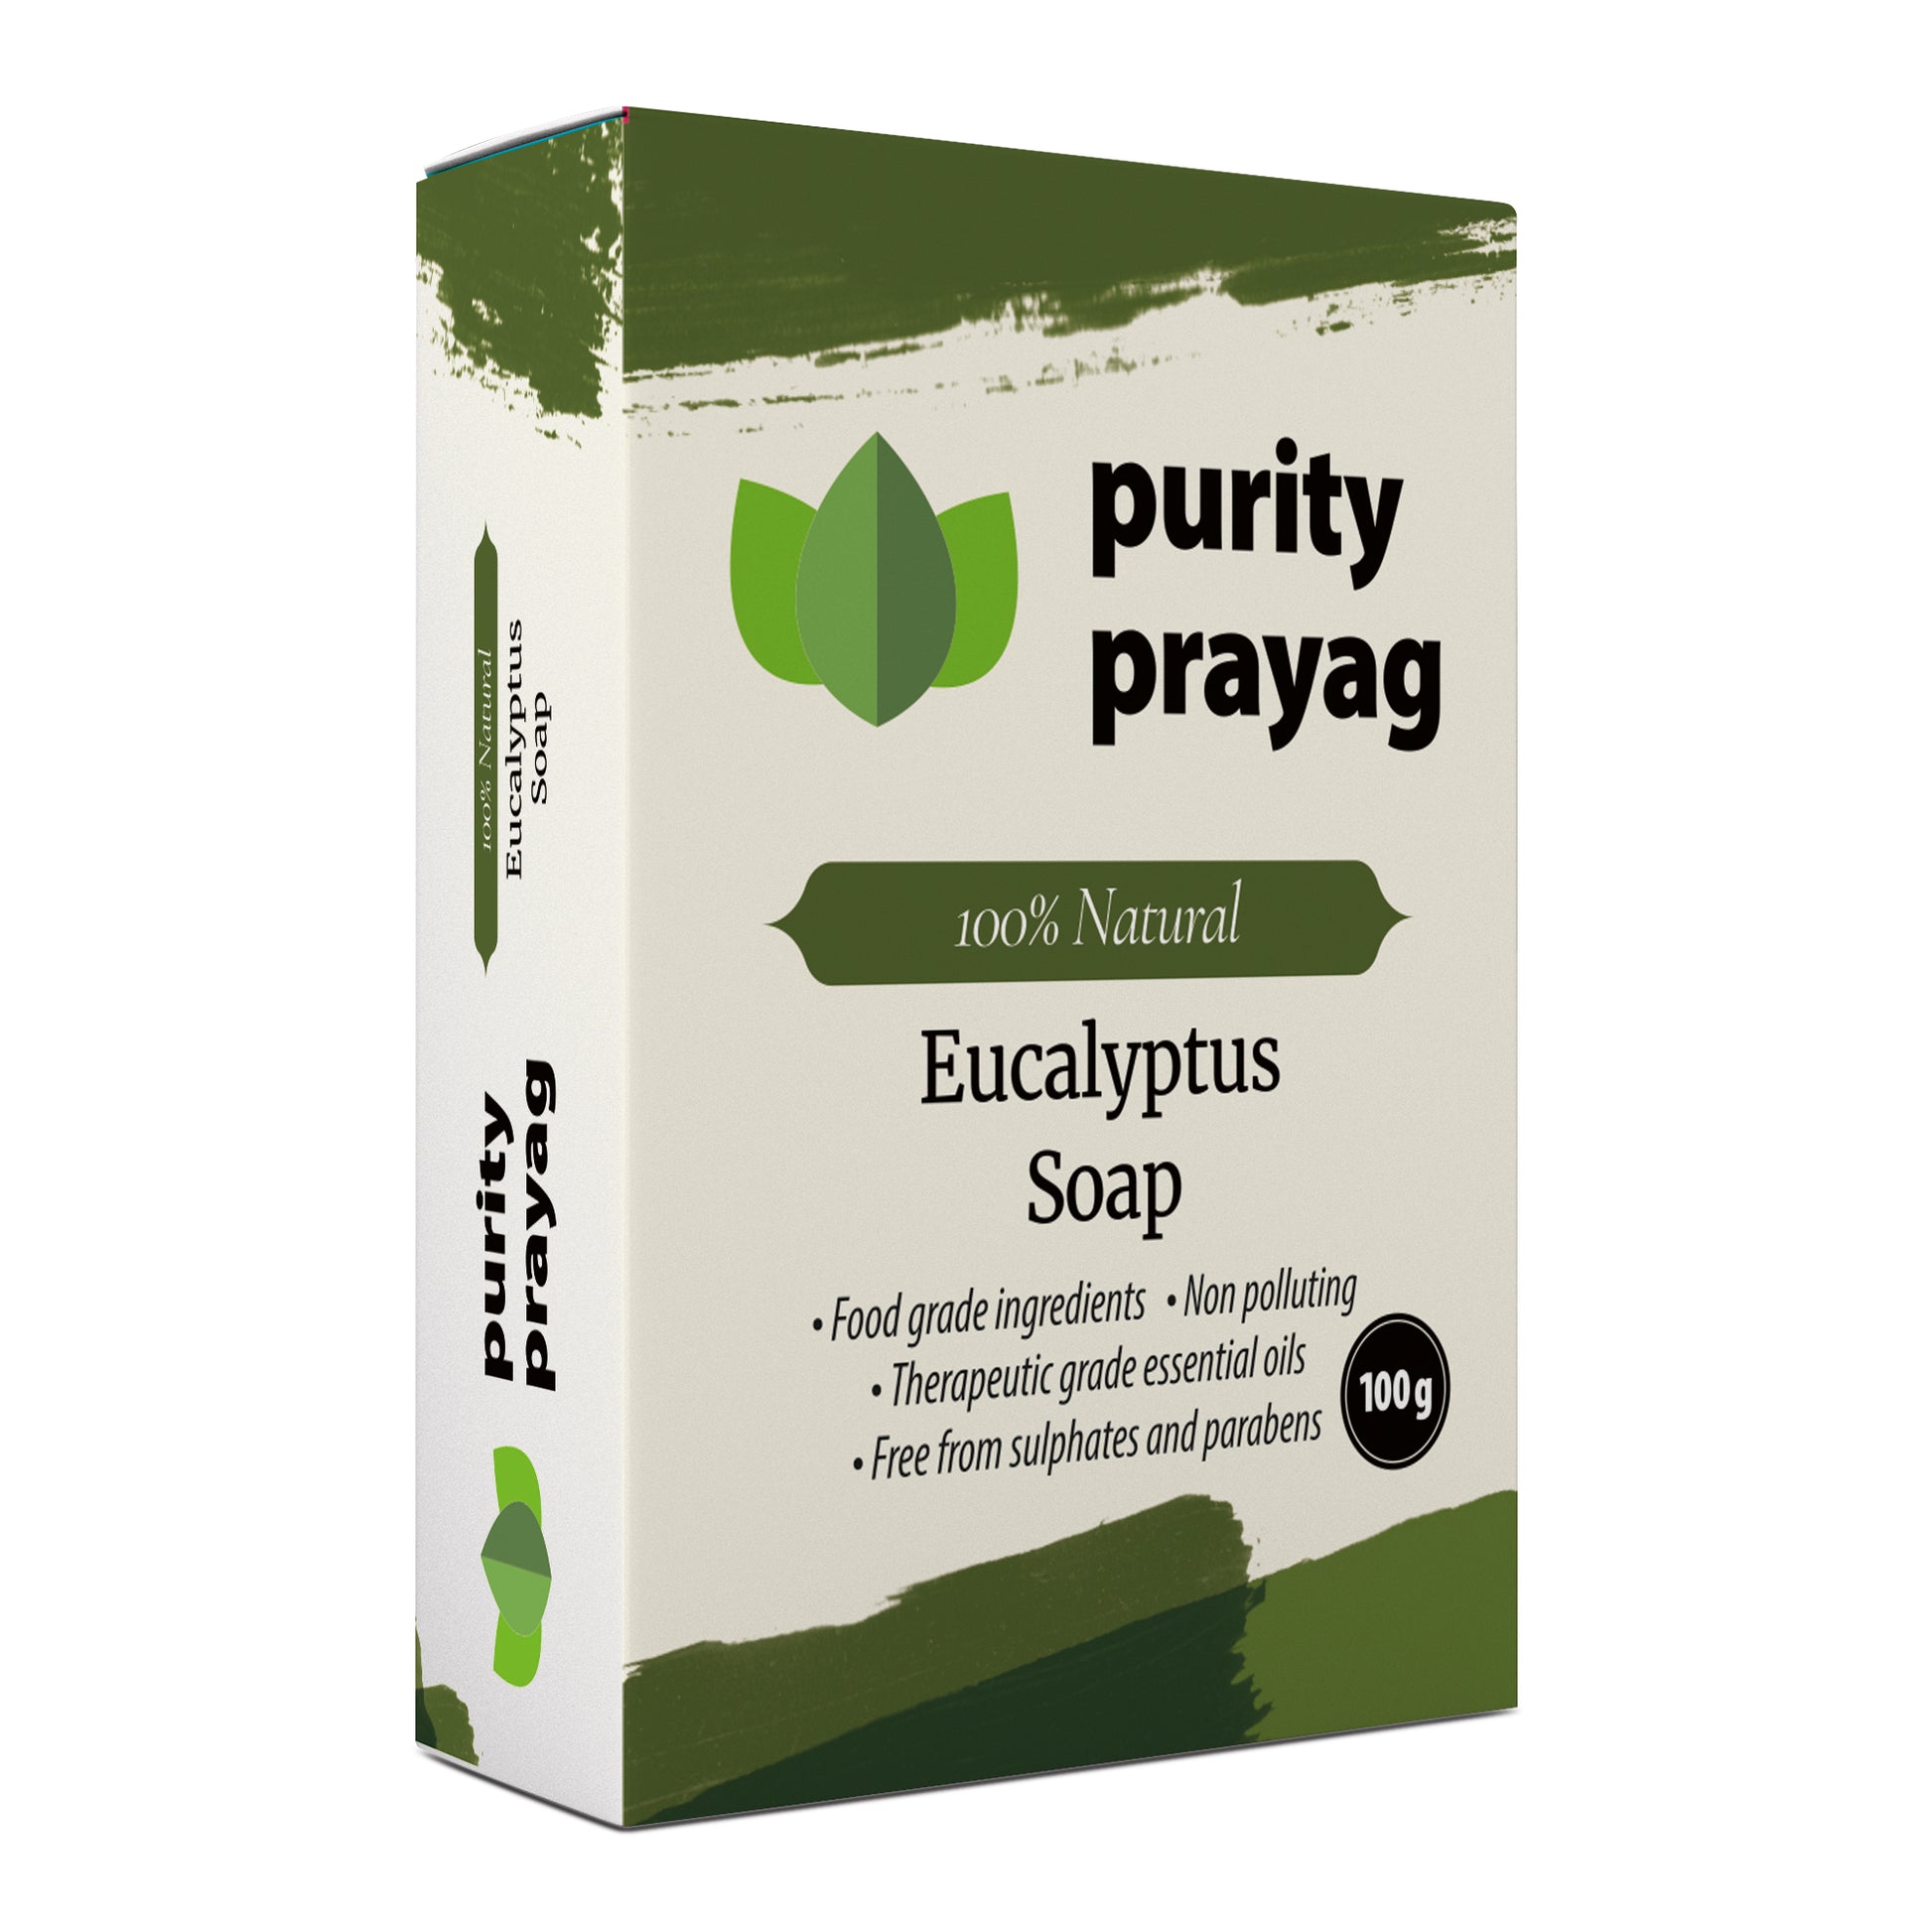 Purity Prayag Eucalyptus Soap